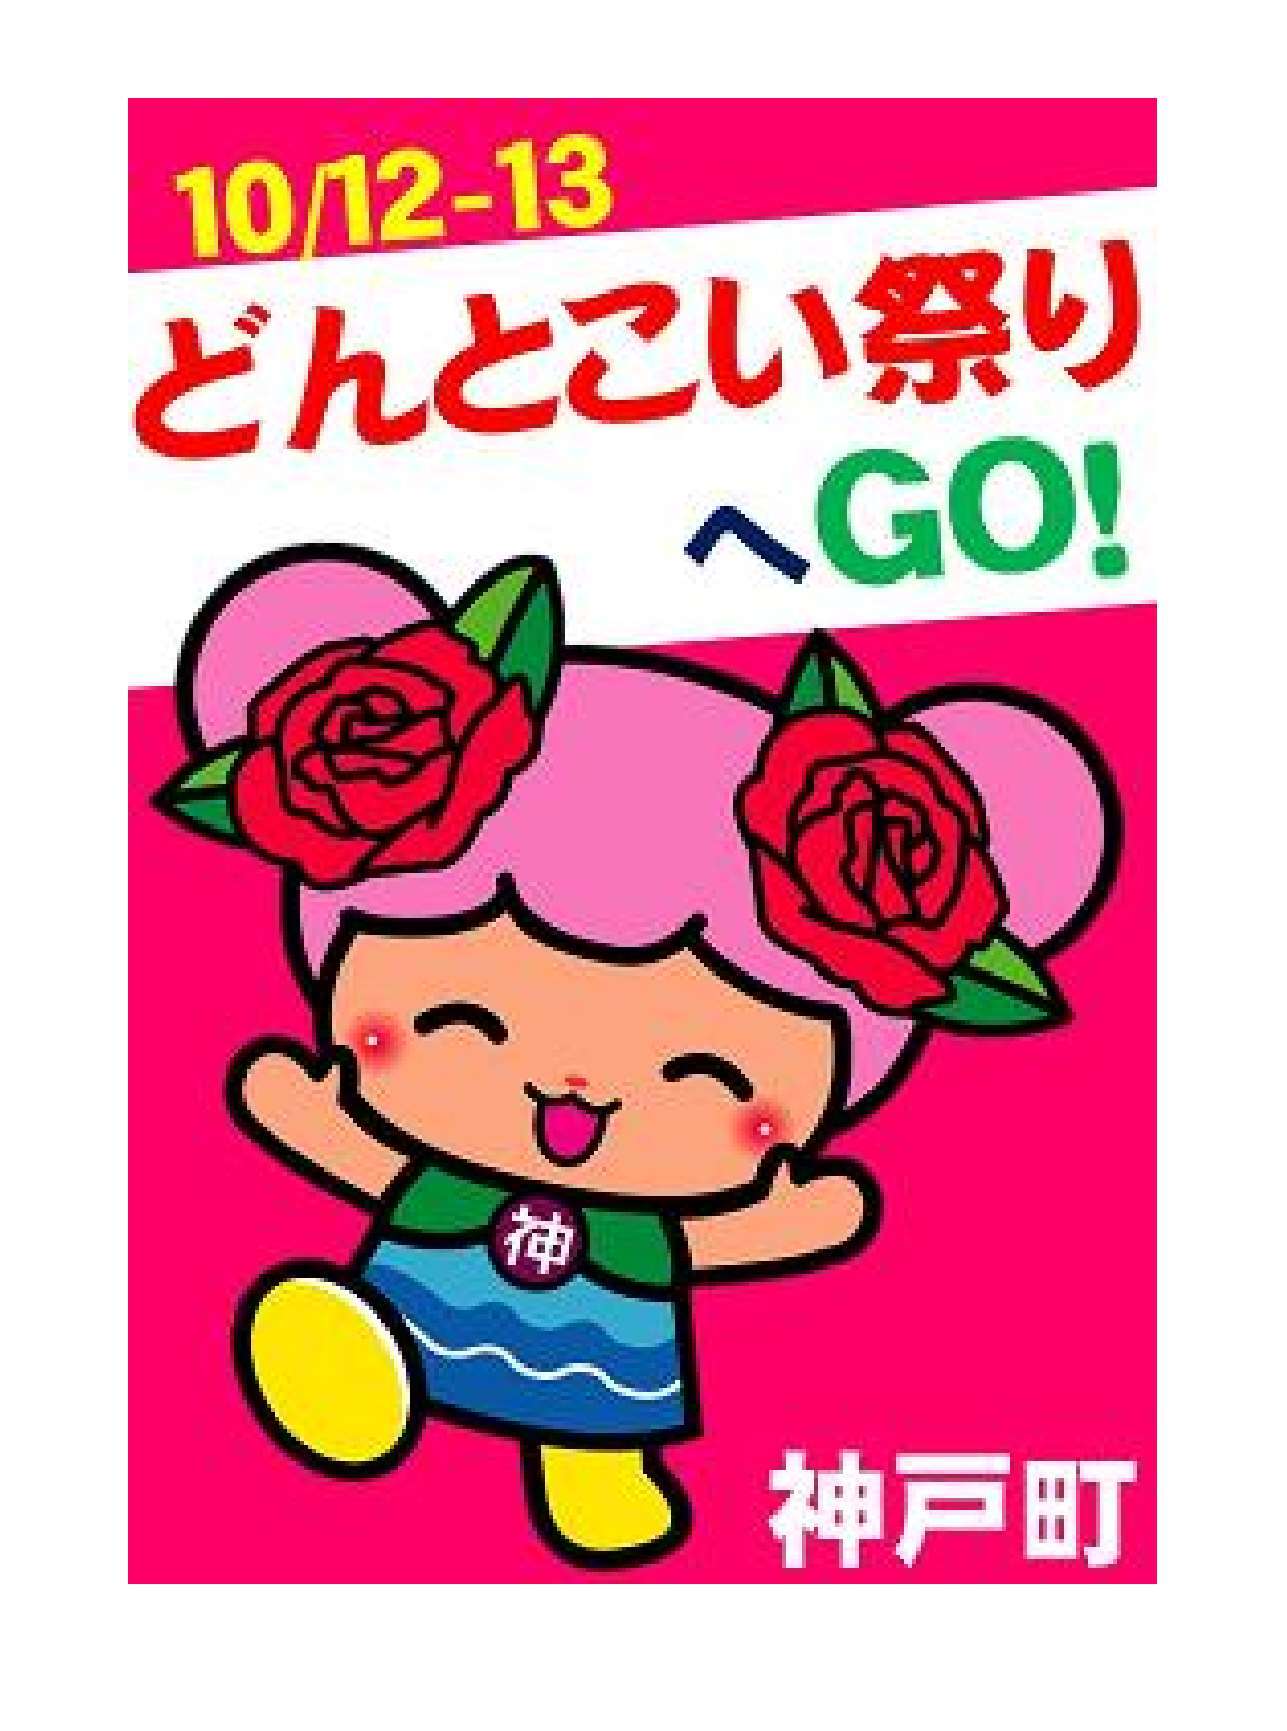 ｇｏ ご どんとこい祭り記念ヘッドマークを掲出し ｇｏ ご どんとこい祭りに養老鉄道が出展します 神戸町 養老鉄道株式会社のプレスリリース